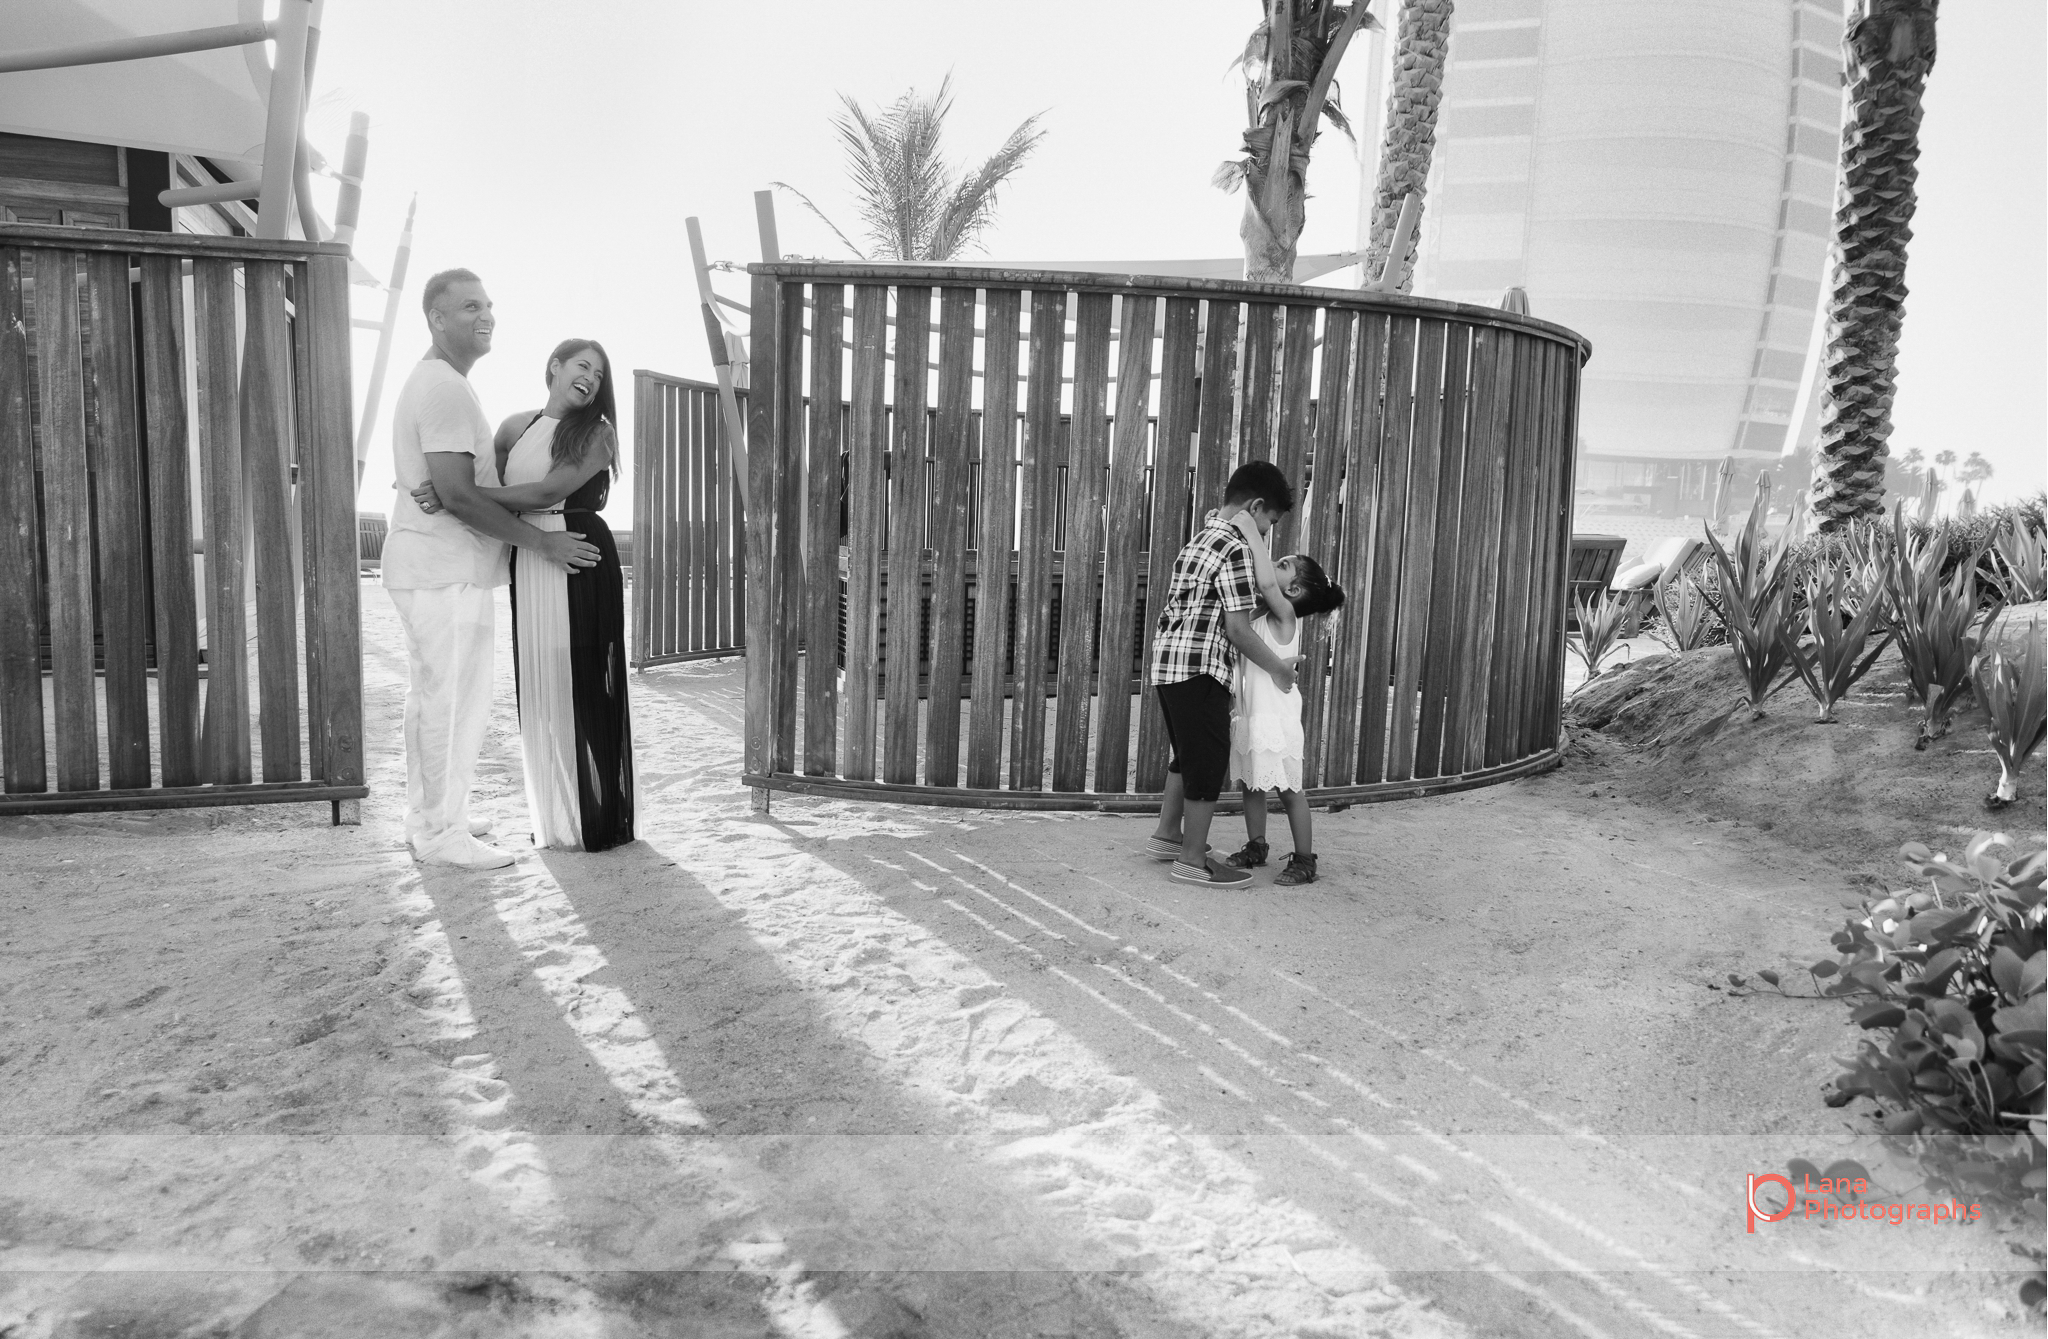  Lana Photographs Dubai Family Photography beach photoshoot portrait of kids imitating parents slow dance 